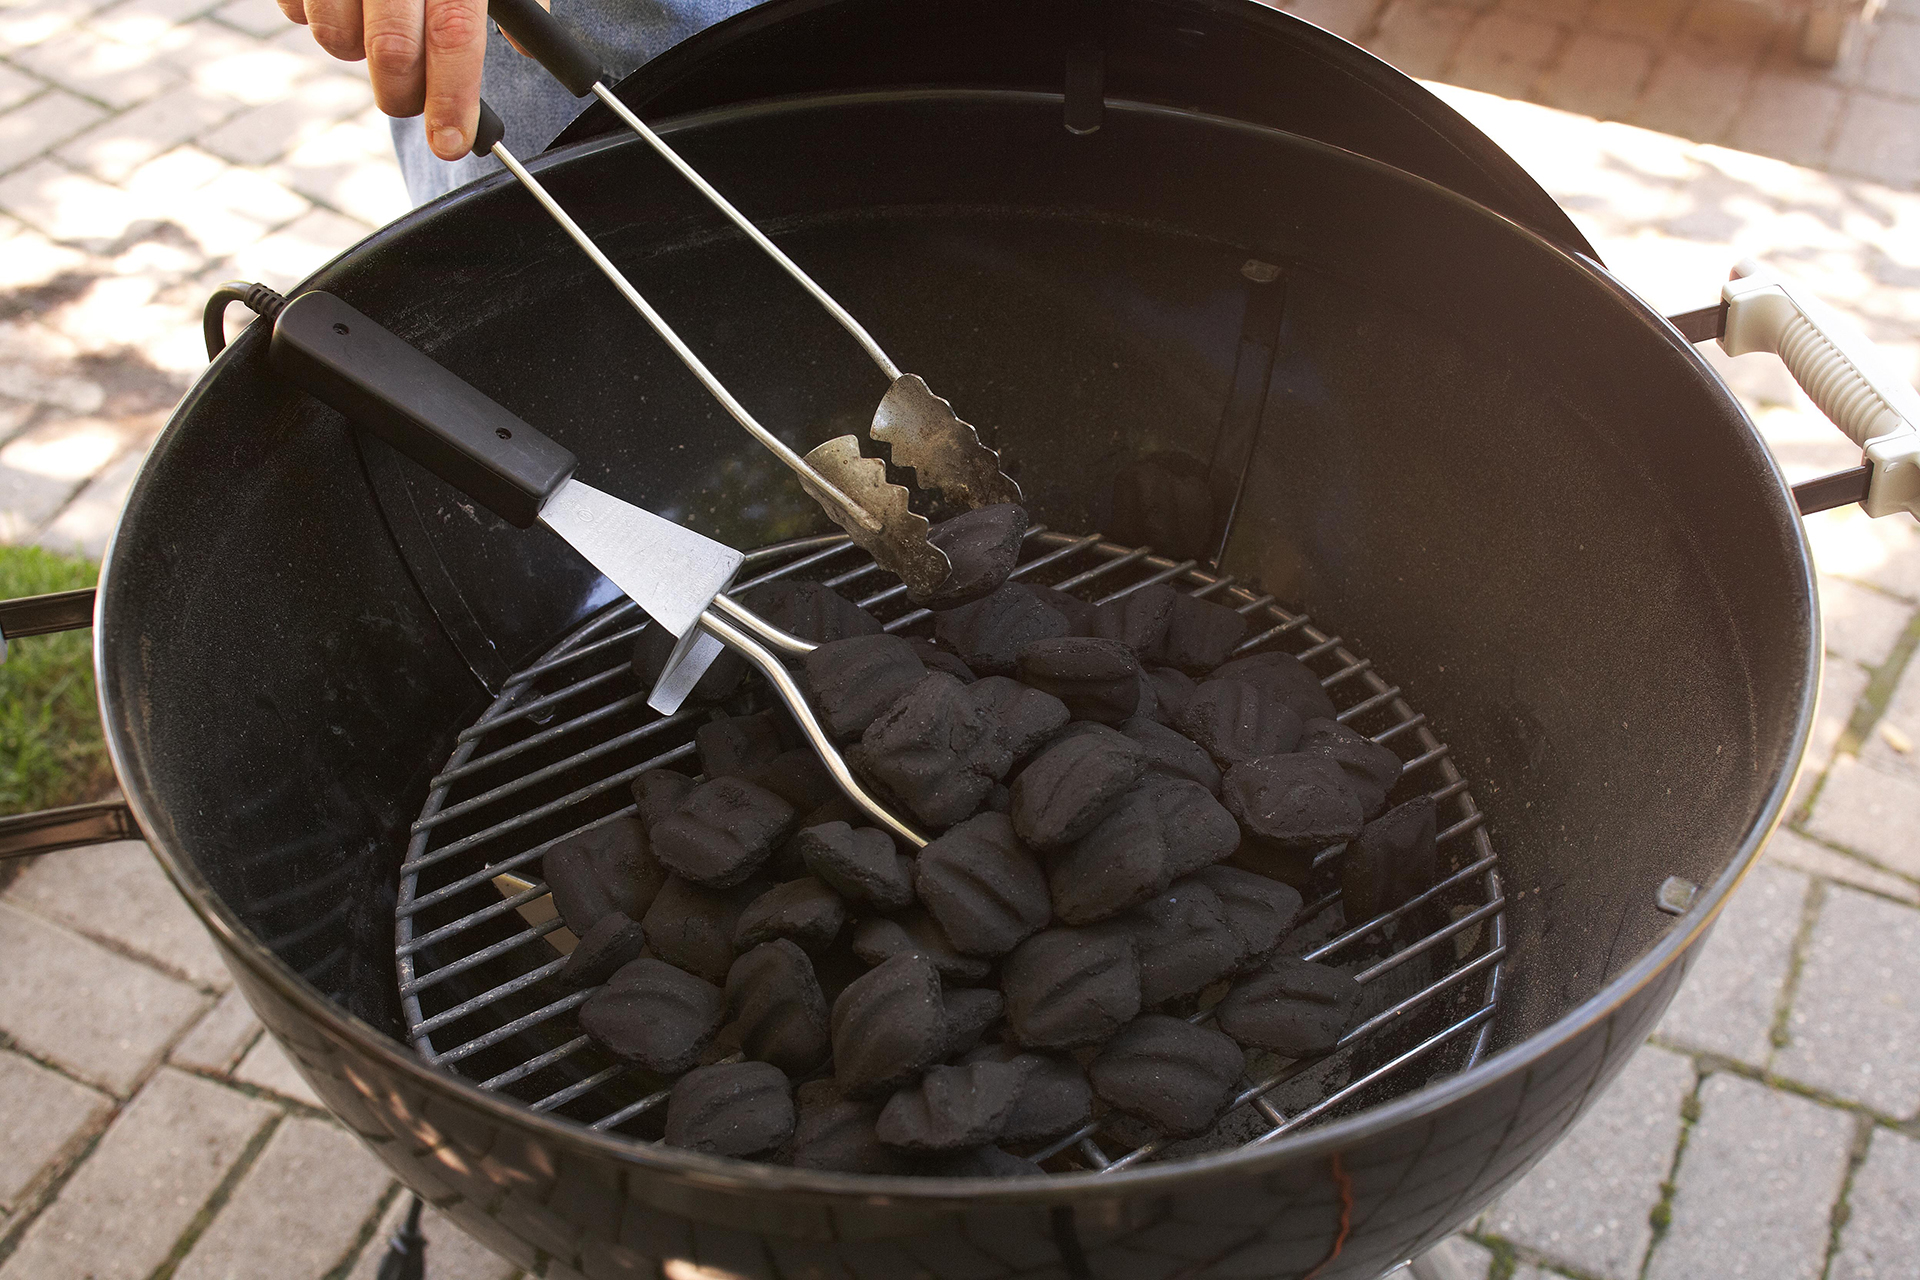 Arrange the coals to adjust the grill temp